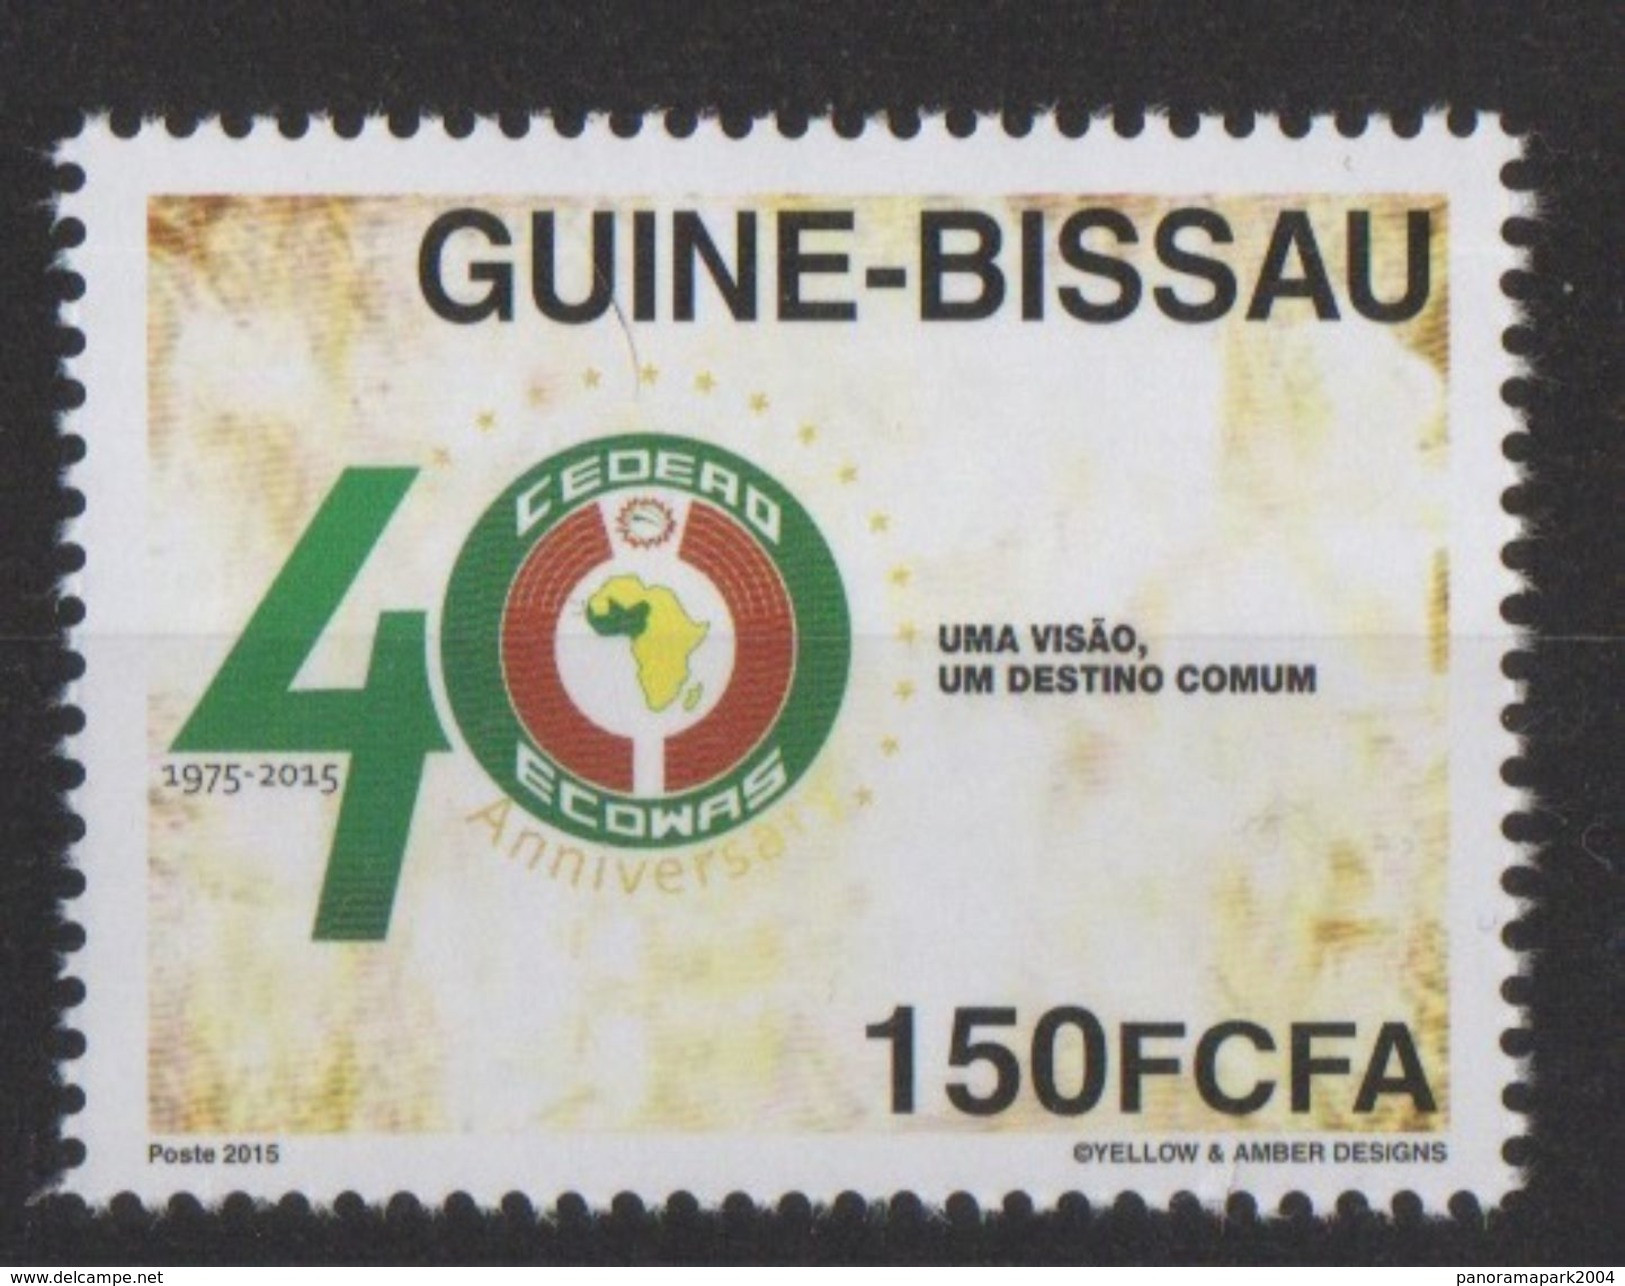 Guiné Bissau Guinea Guinée 2015 Emission Commune Joint Issue CEDEAO ECOWAS 40 Ans 40 Years - Guinea-Bissau